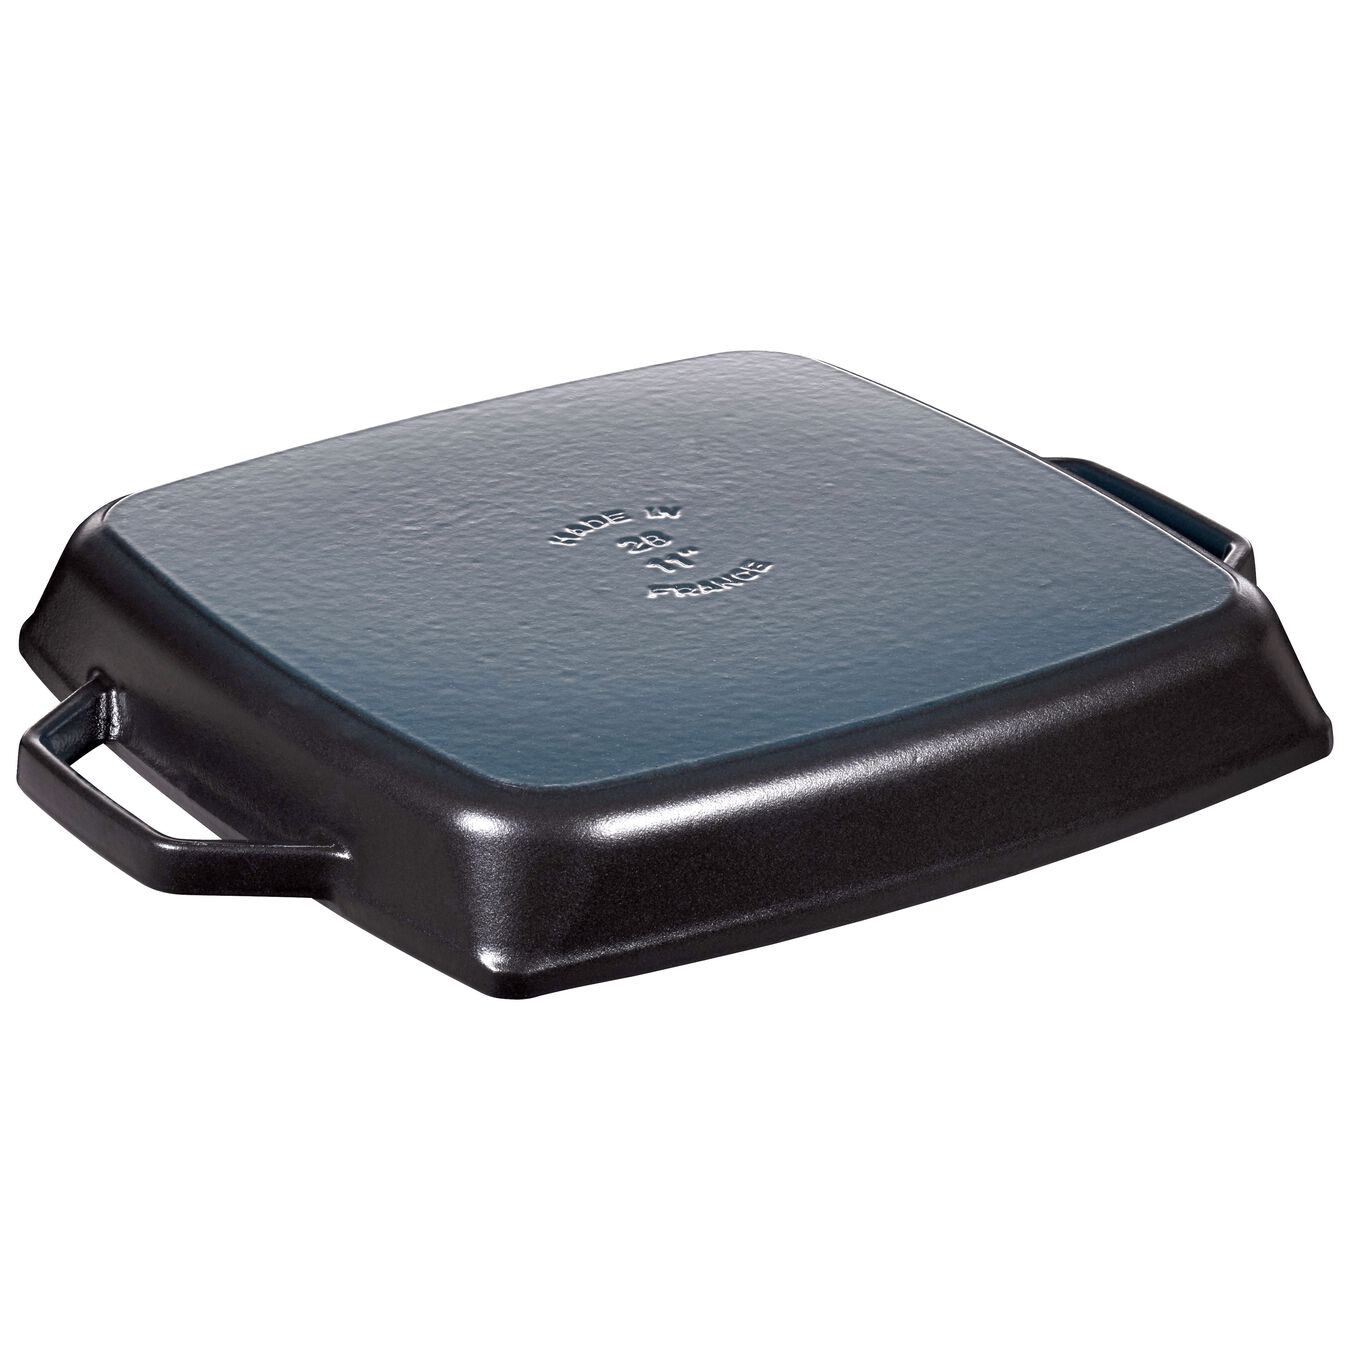 28 x 28 cm square Cast iron Grill pan black,,large 2